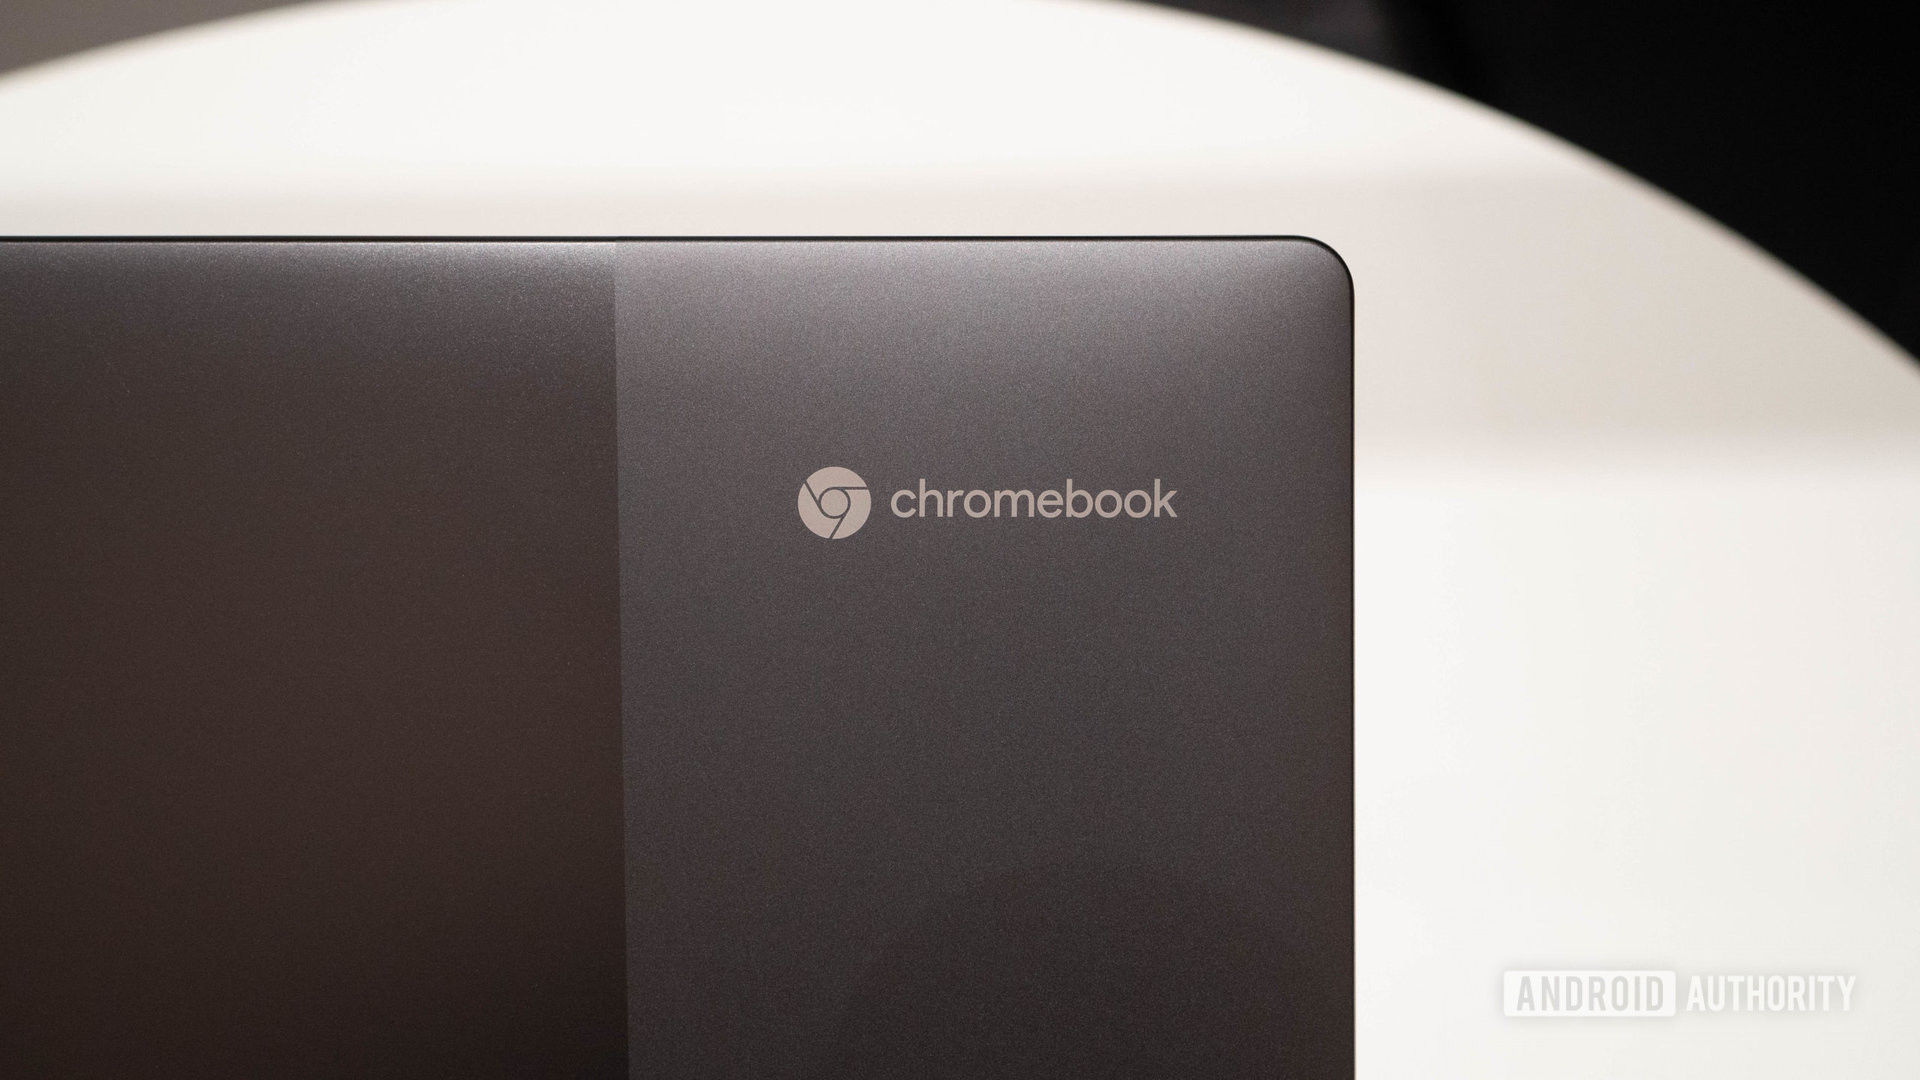 Chromebook Lenovo IdeaPad 5i menampilkan logo Chromebook